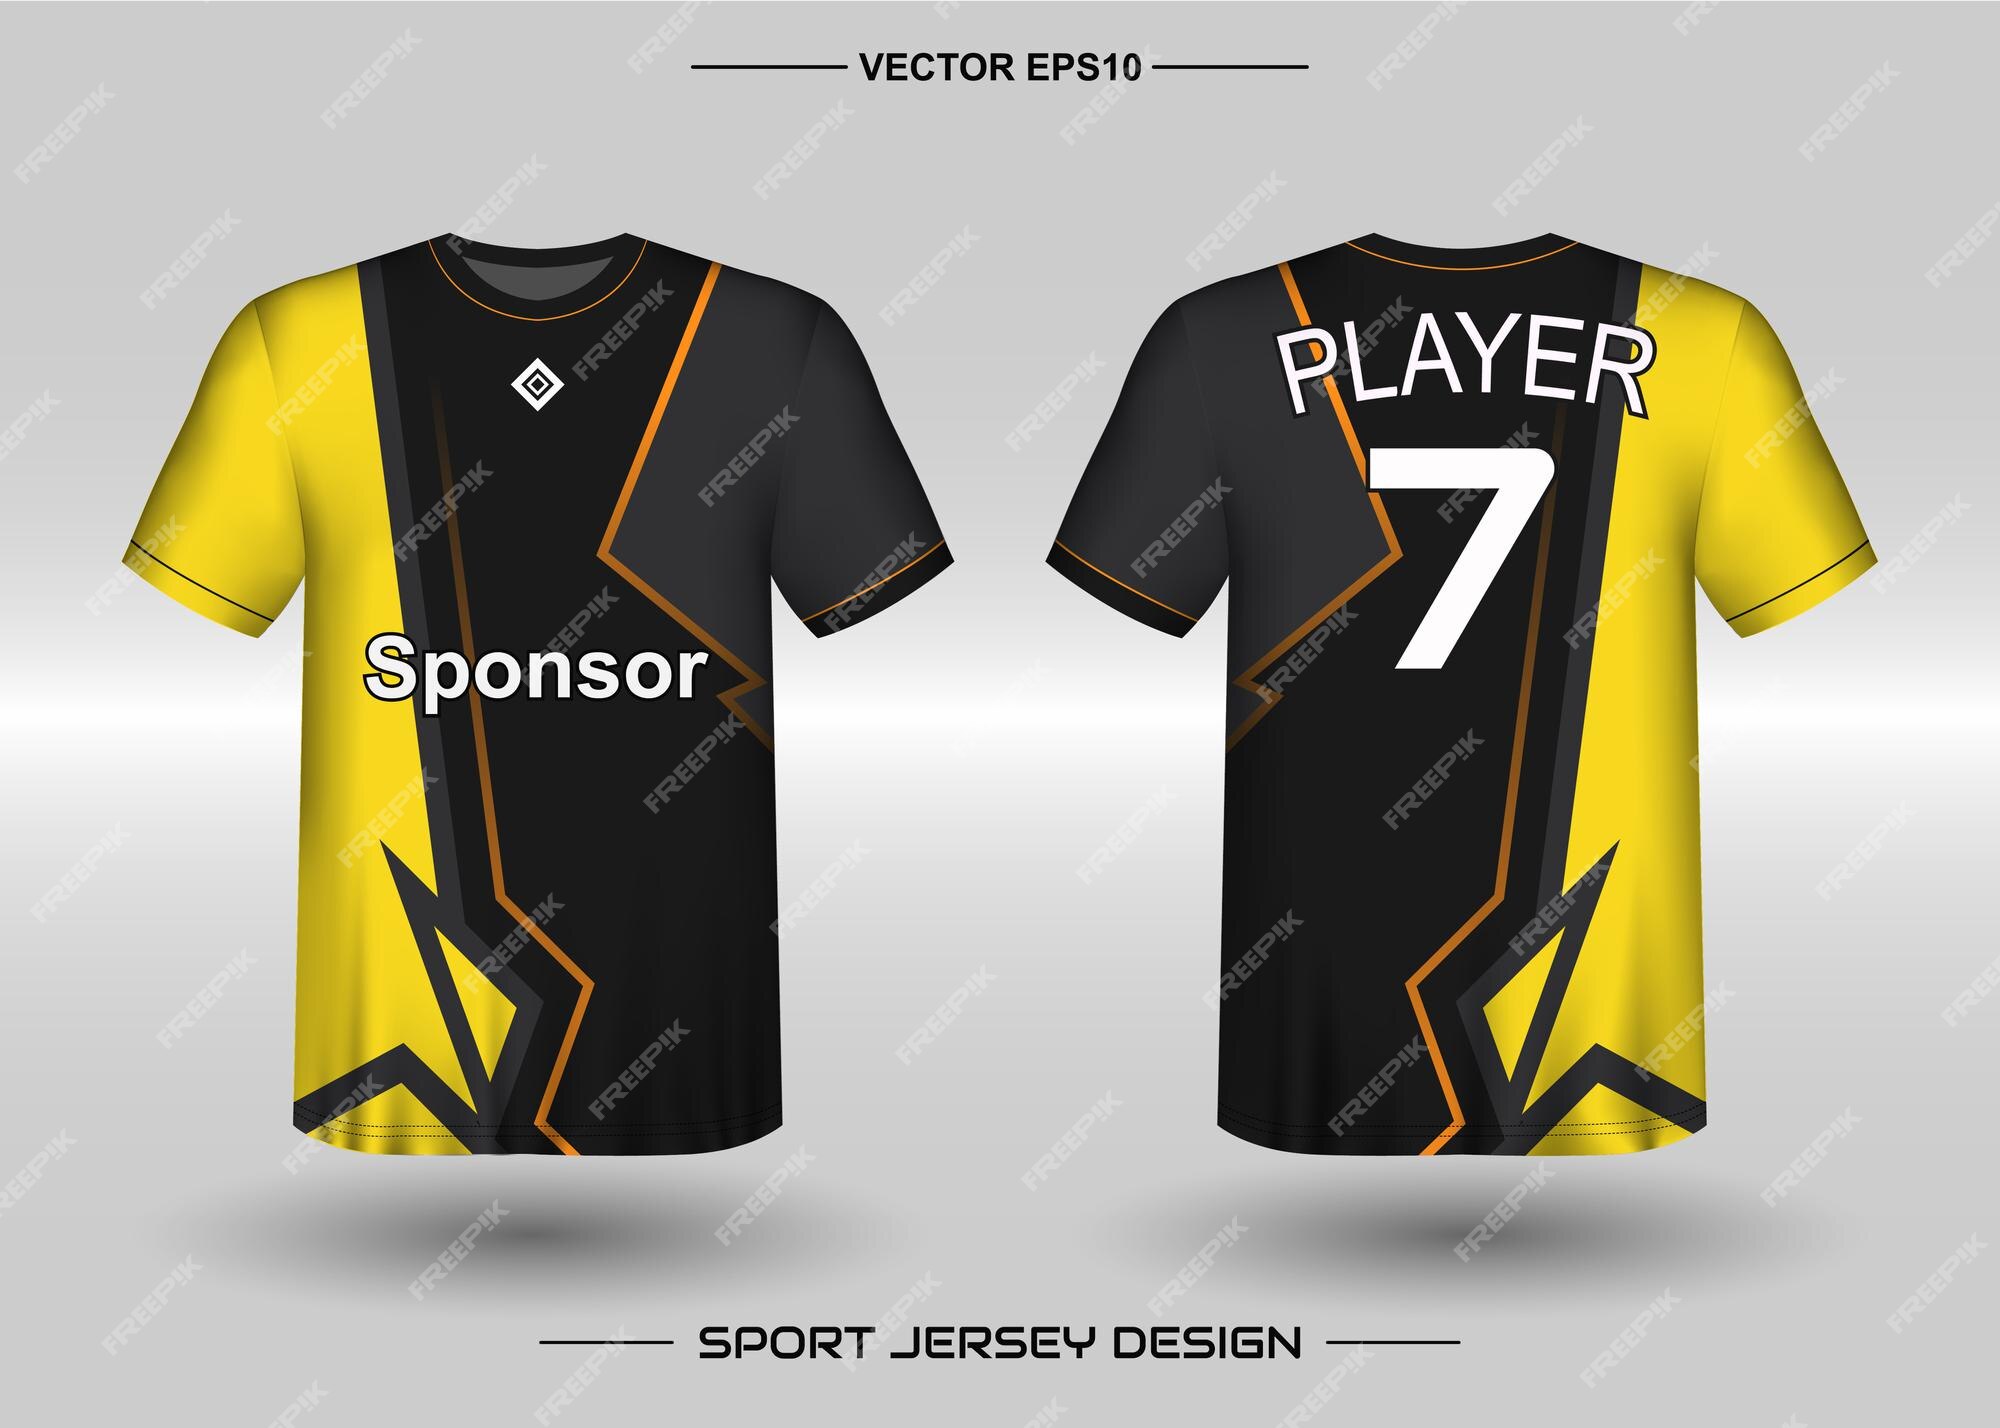 Premium Vector | Sports jersey design template for soccer team